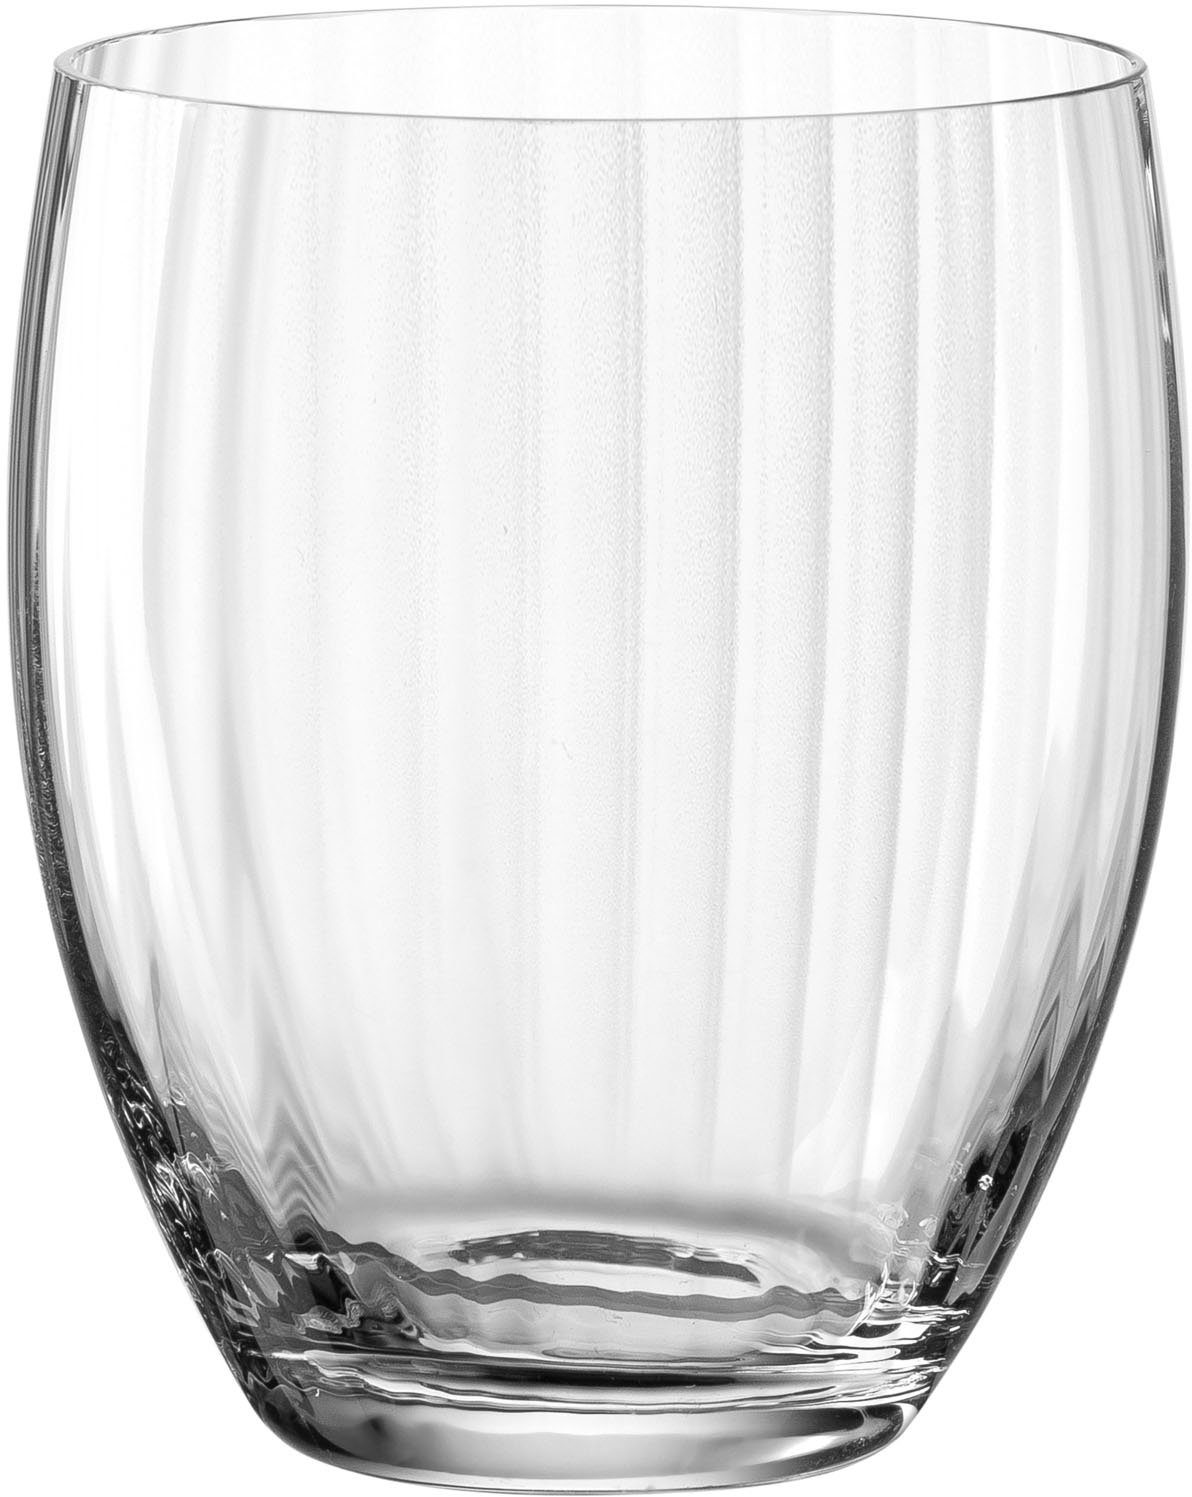 LEONARDO Becher POESIA, Kristallglas, 380 ml, 6-teilig